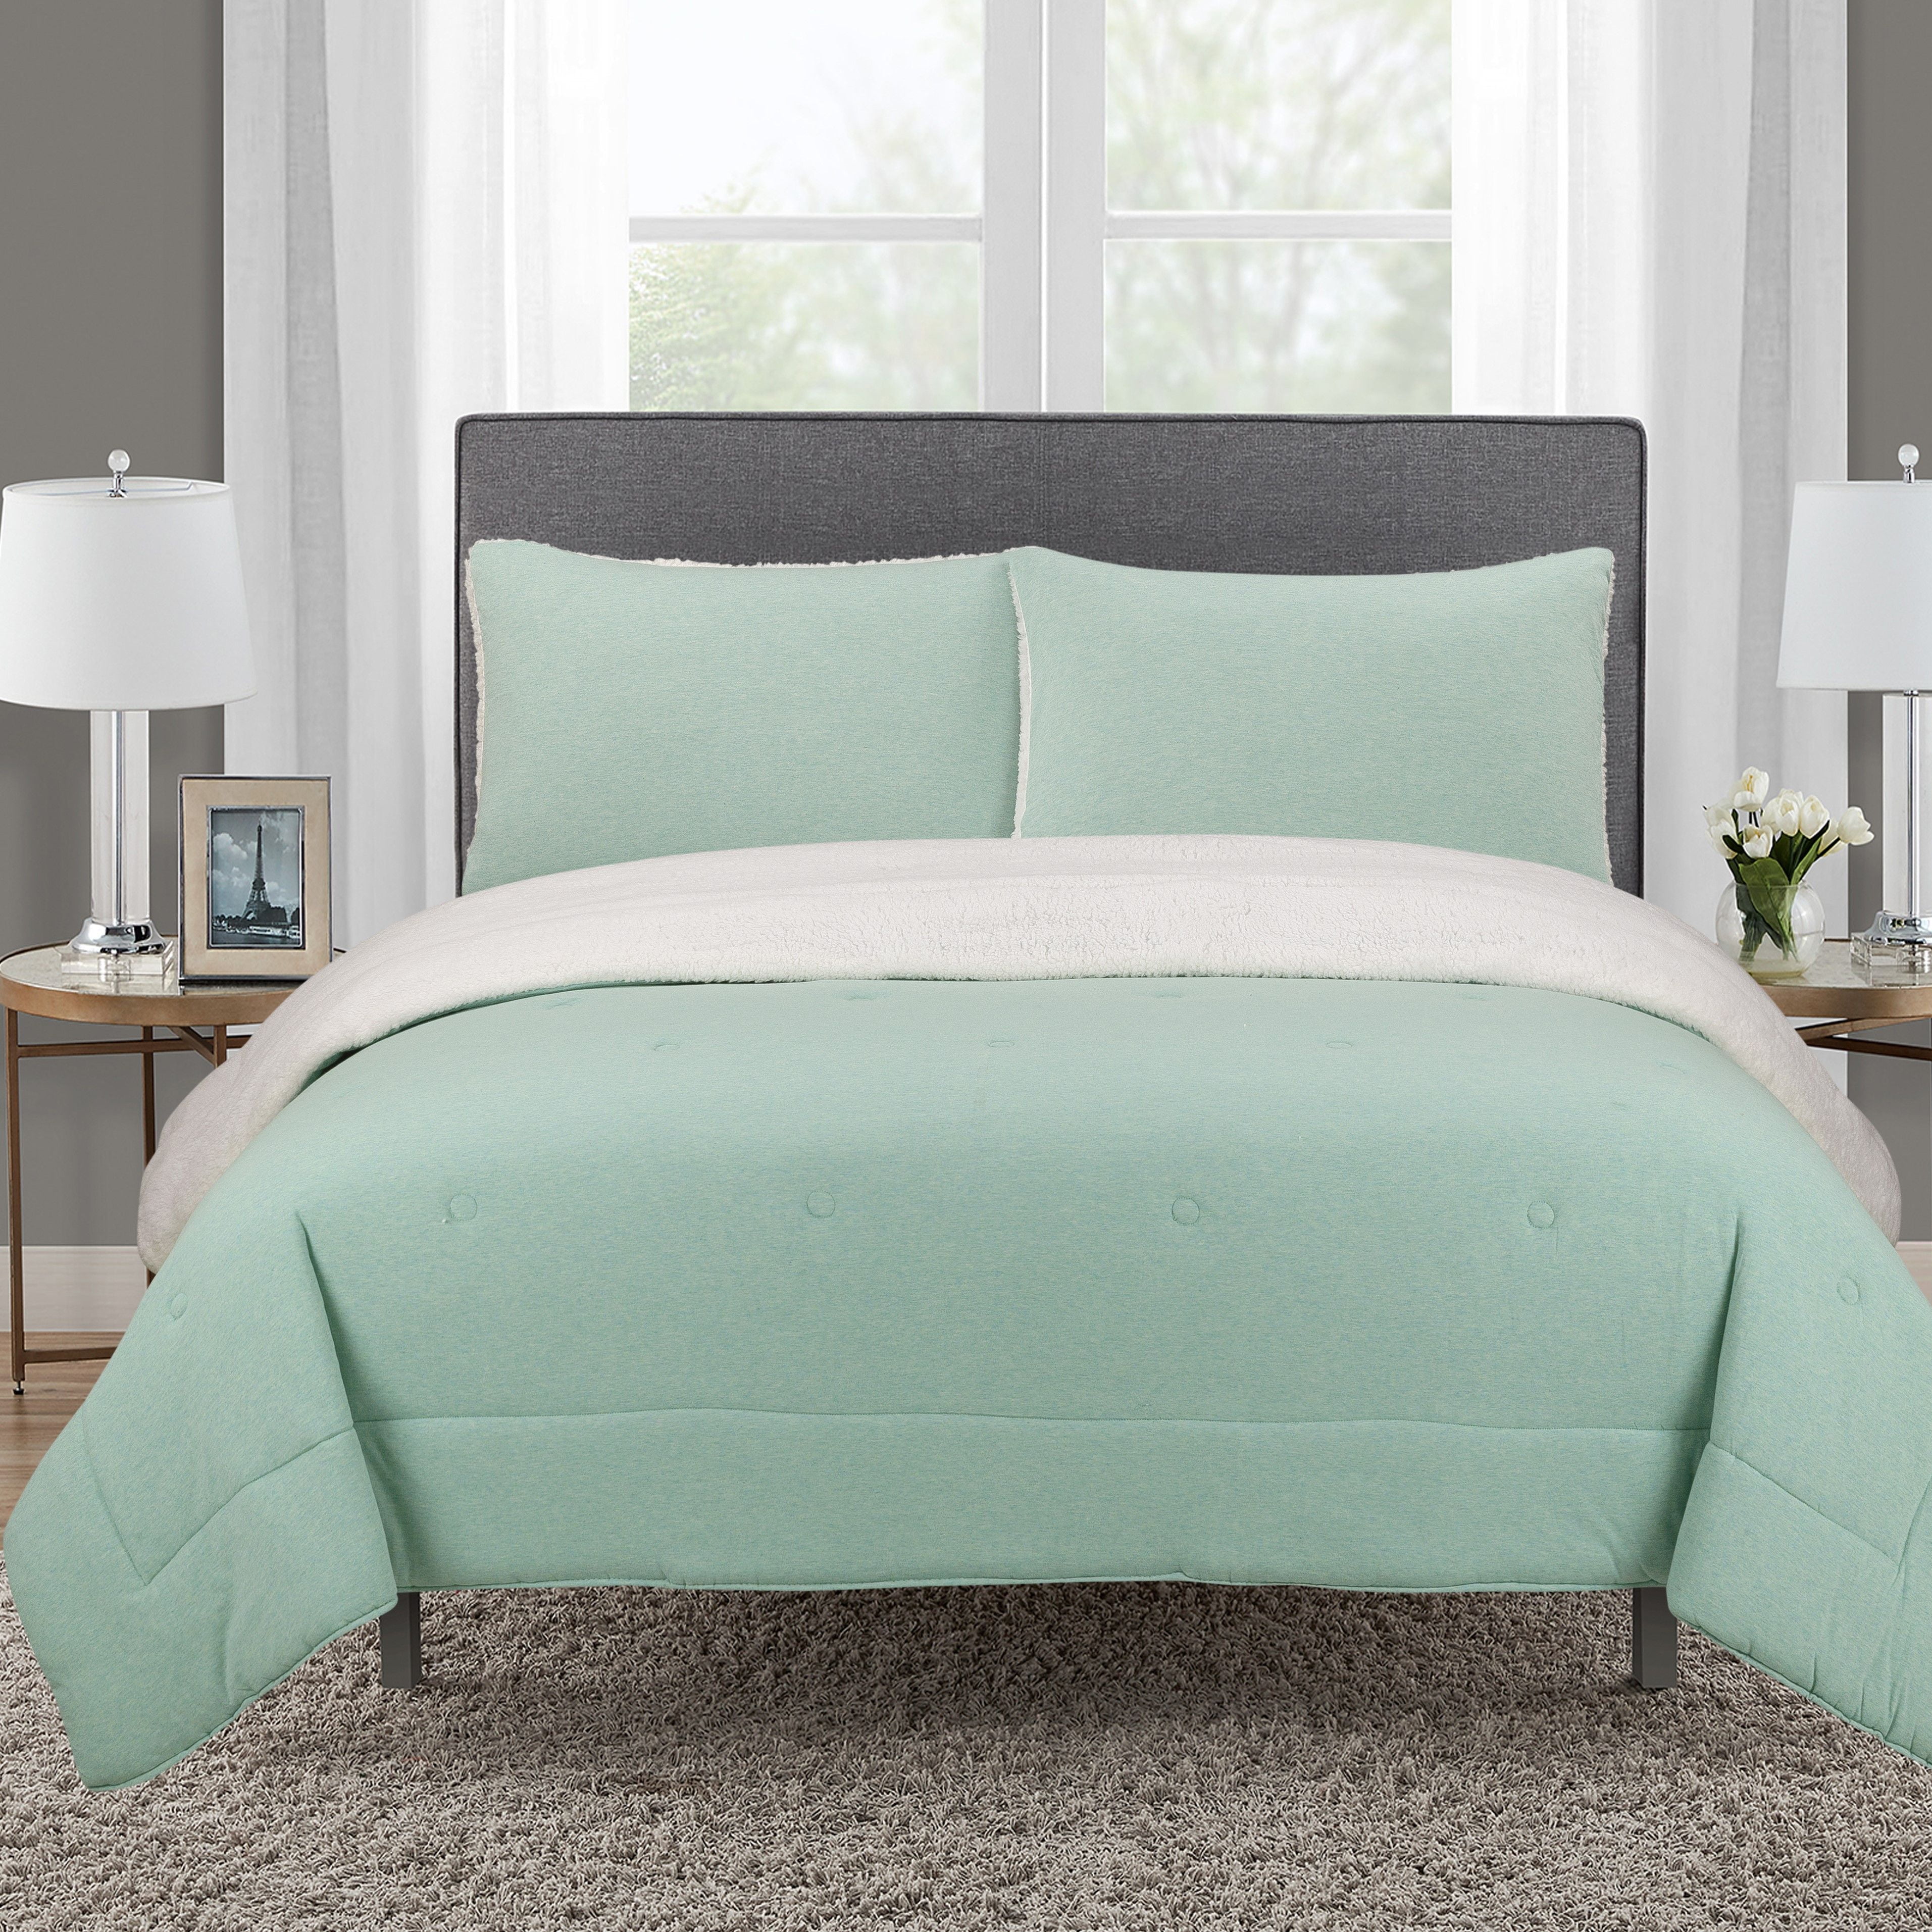 Mainstays Jersey Sherpa Comforter Set, Mint Green Queen Bedspread